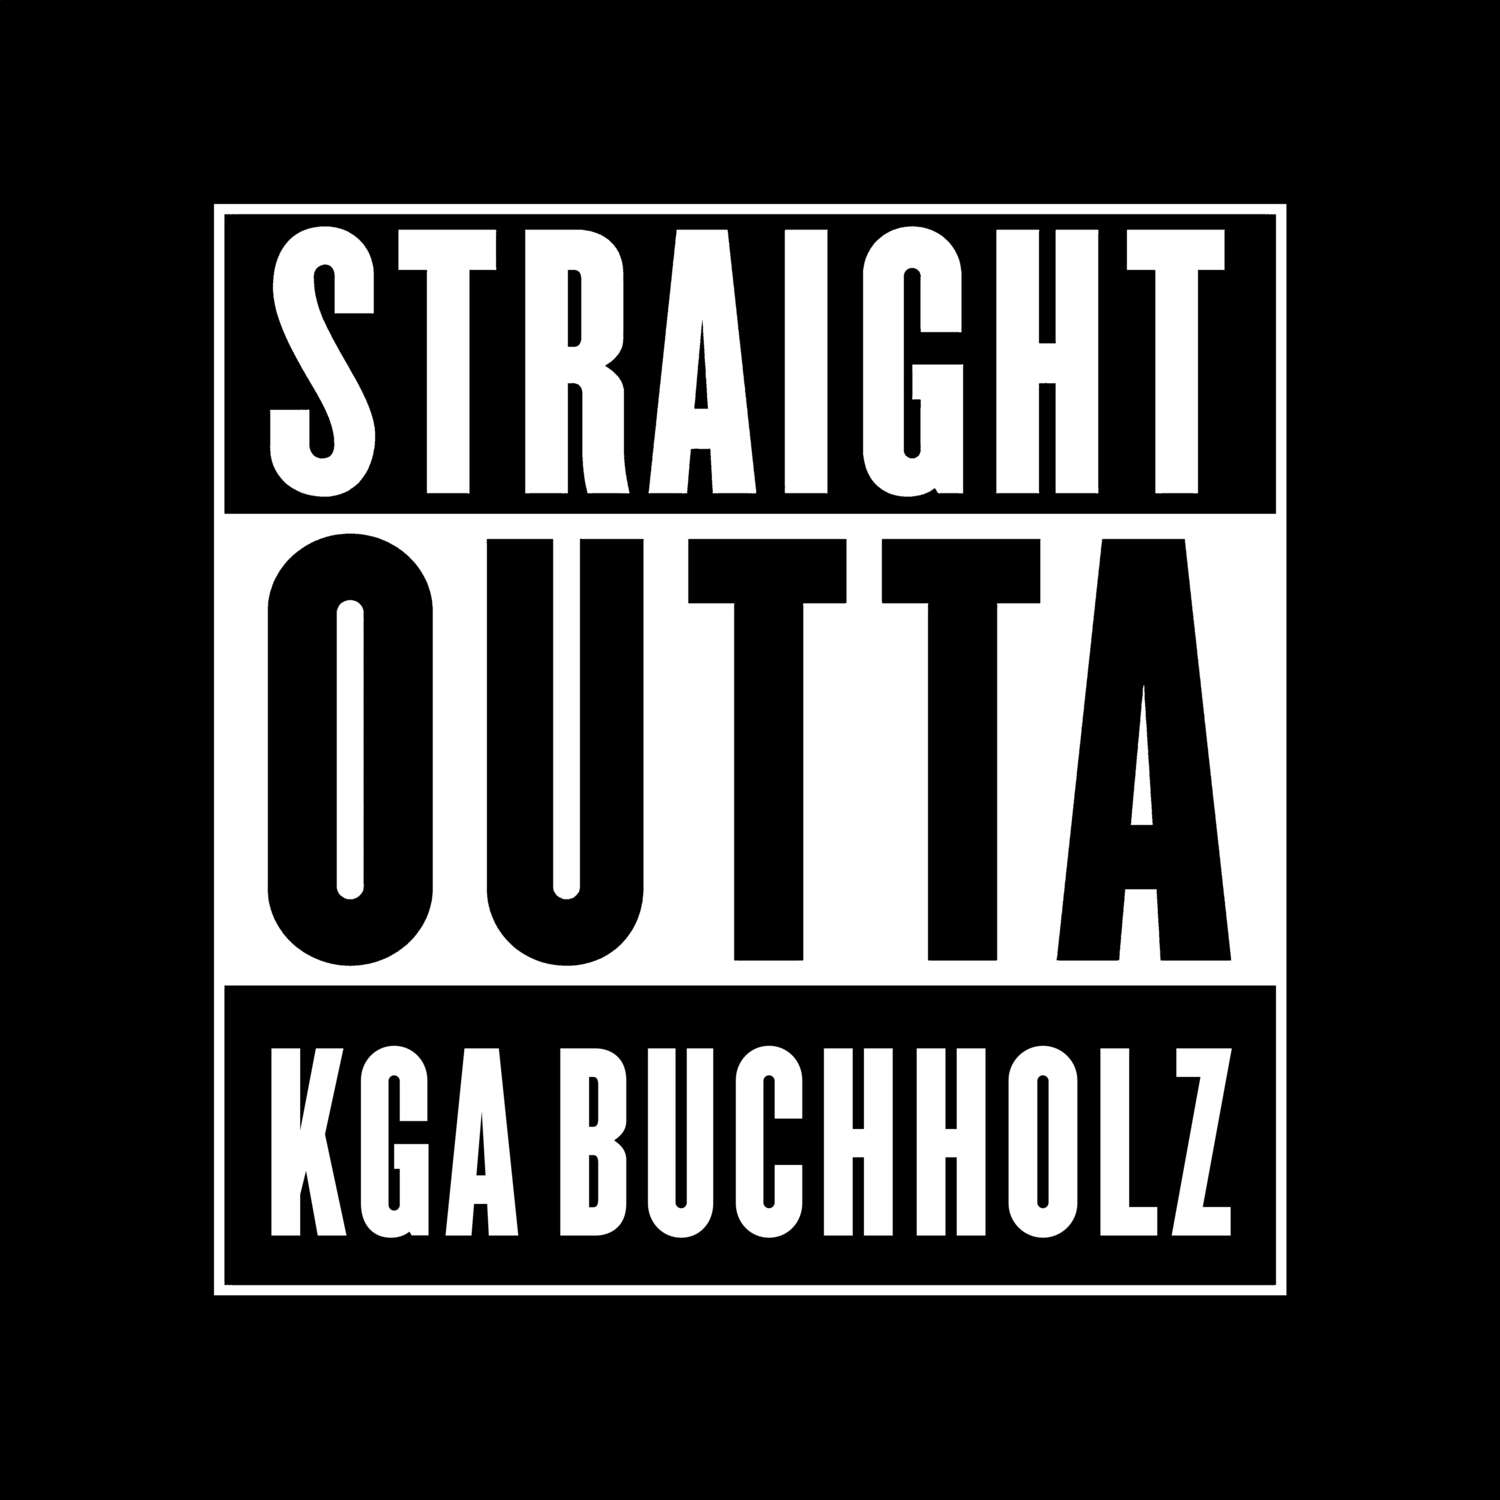 KGA Buchholz T-Shirt »Straight Outta«